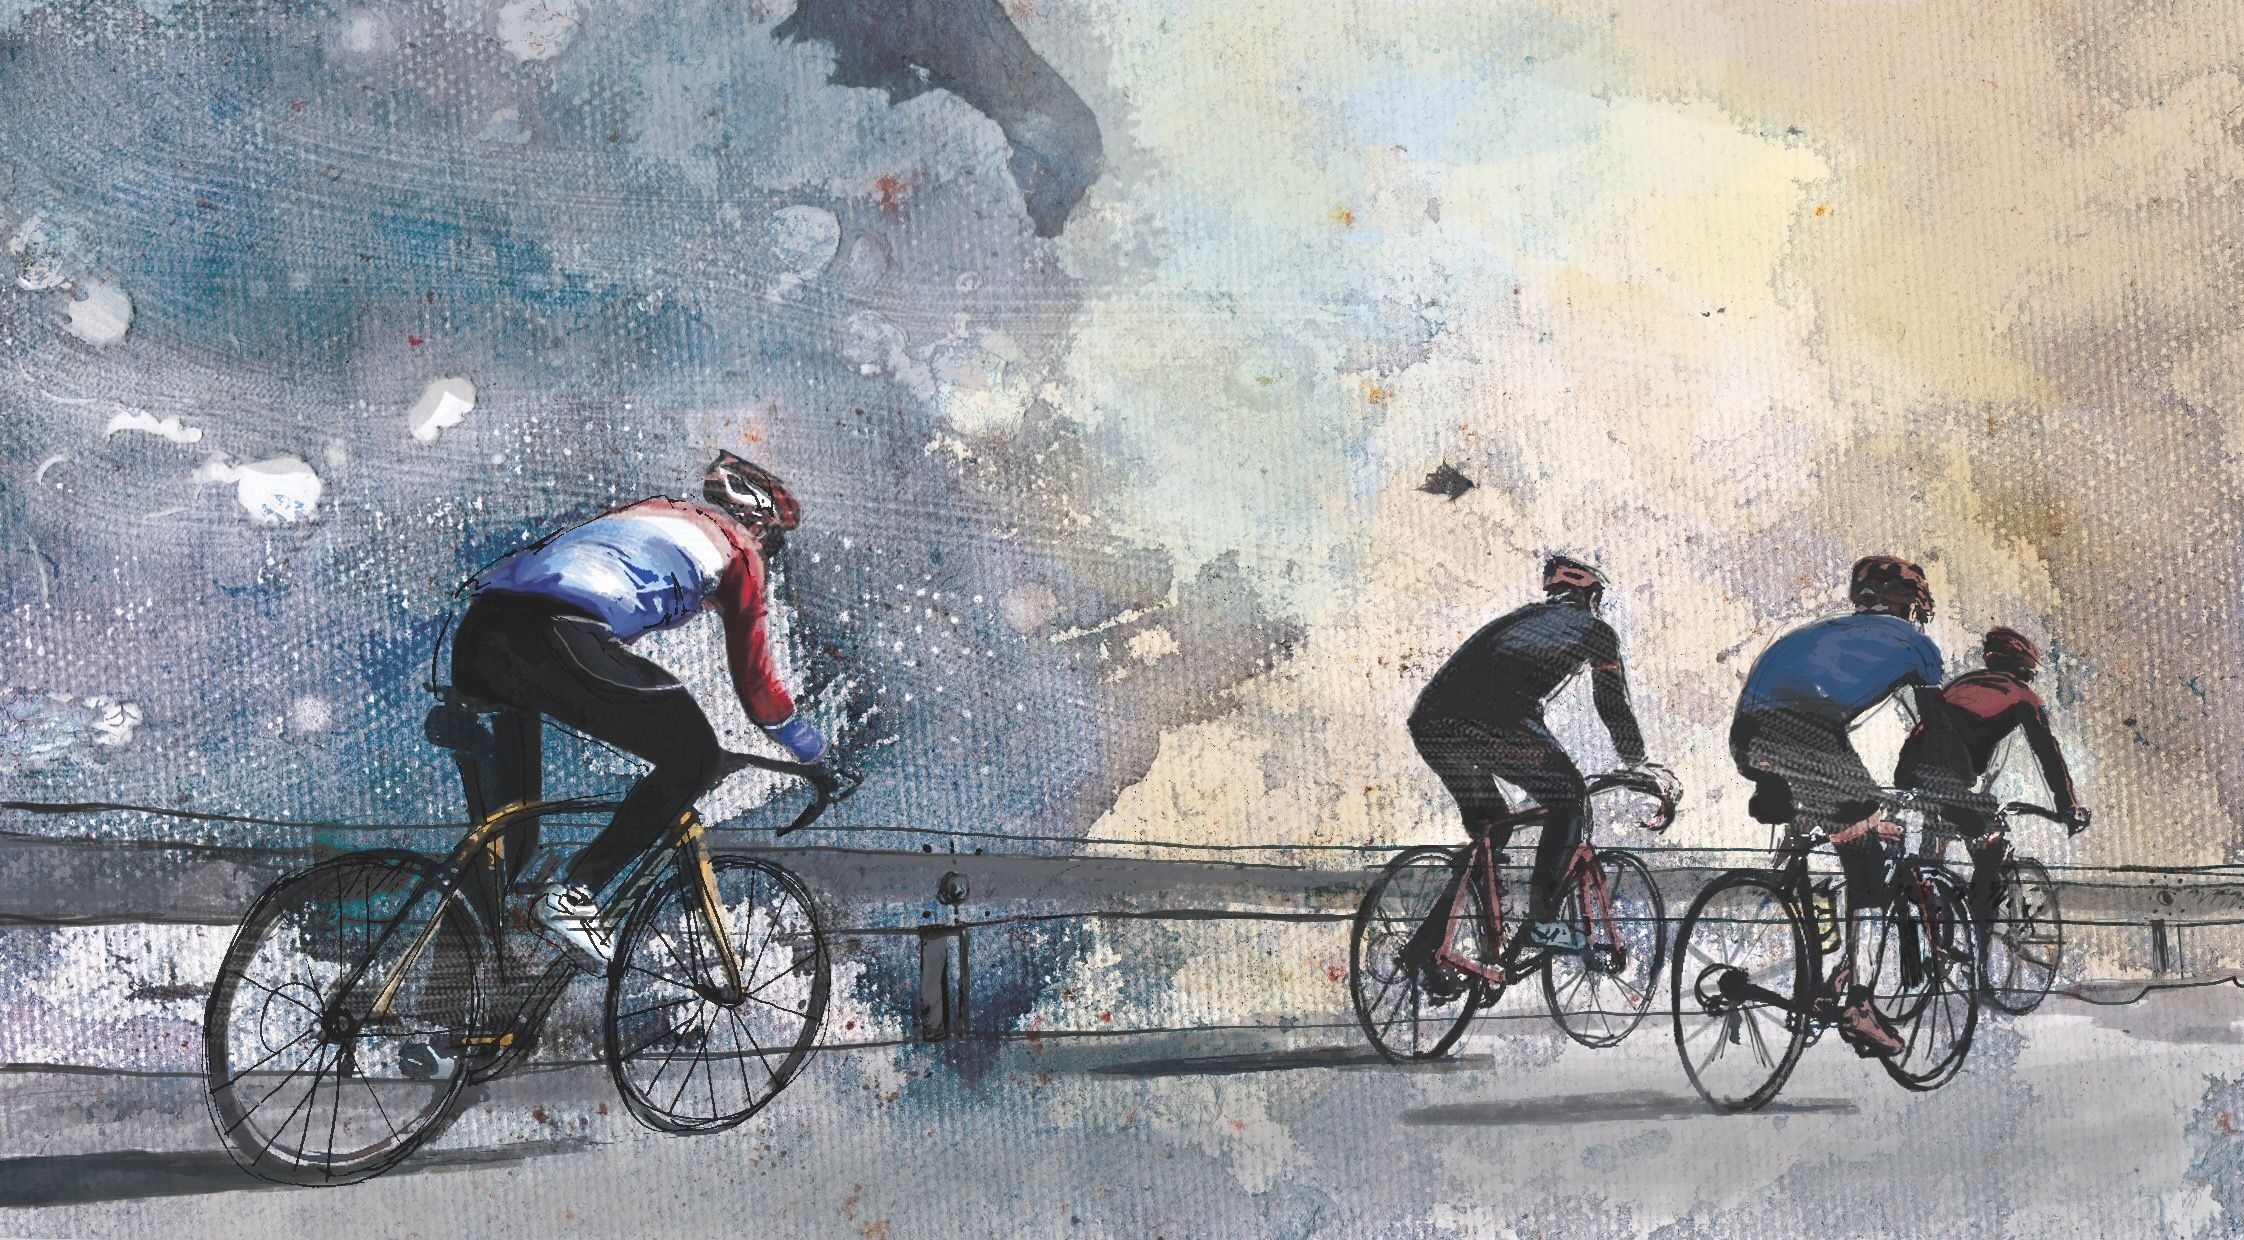 2244x1240 Cycling art road bike watercolor | Bike illustration, Cycling artwork, Bicycle art